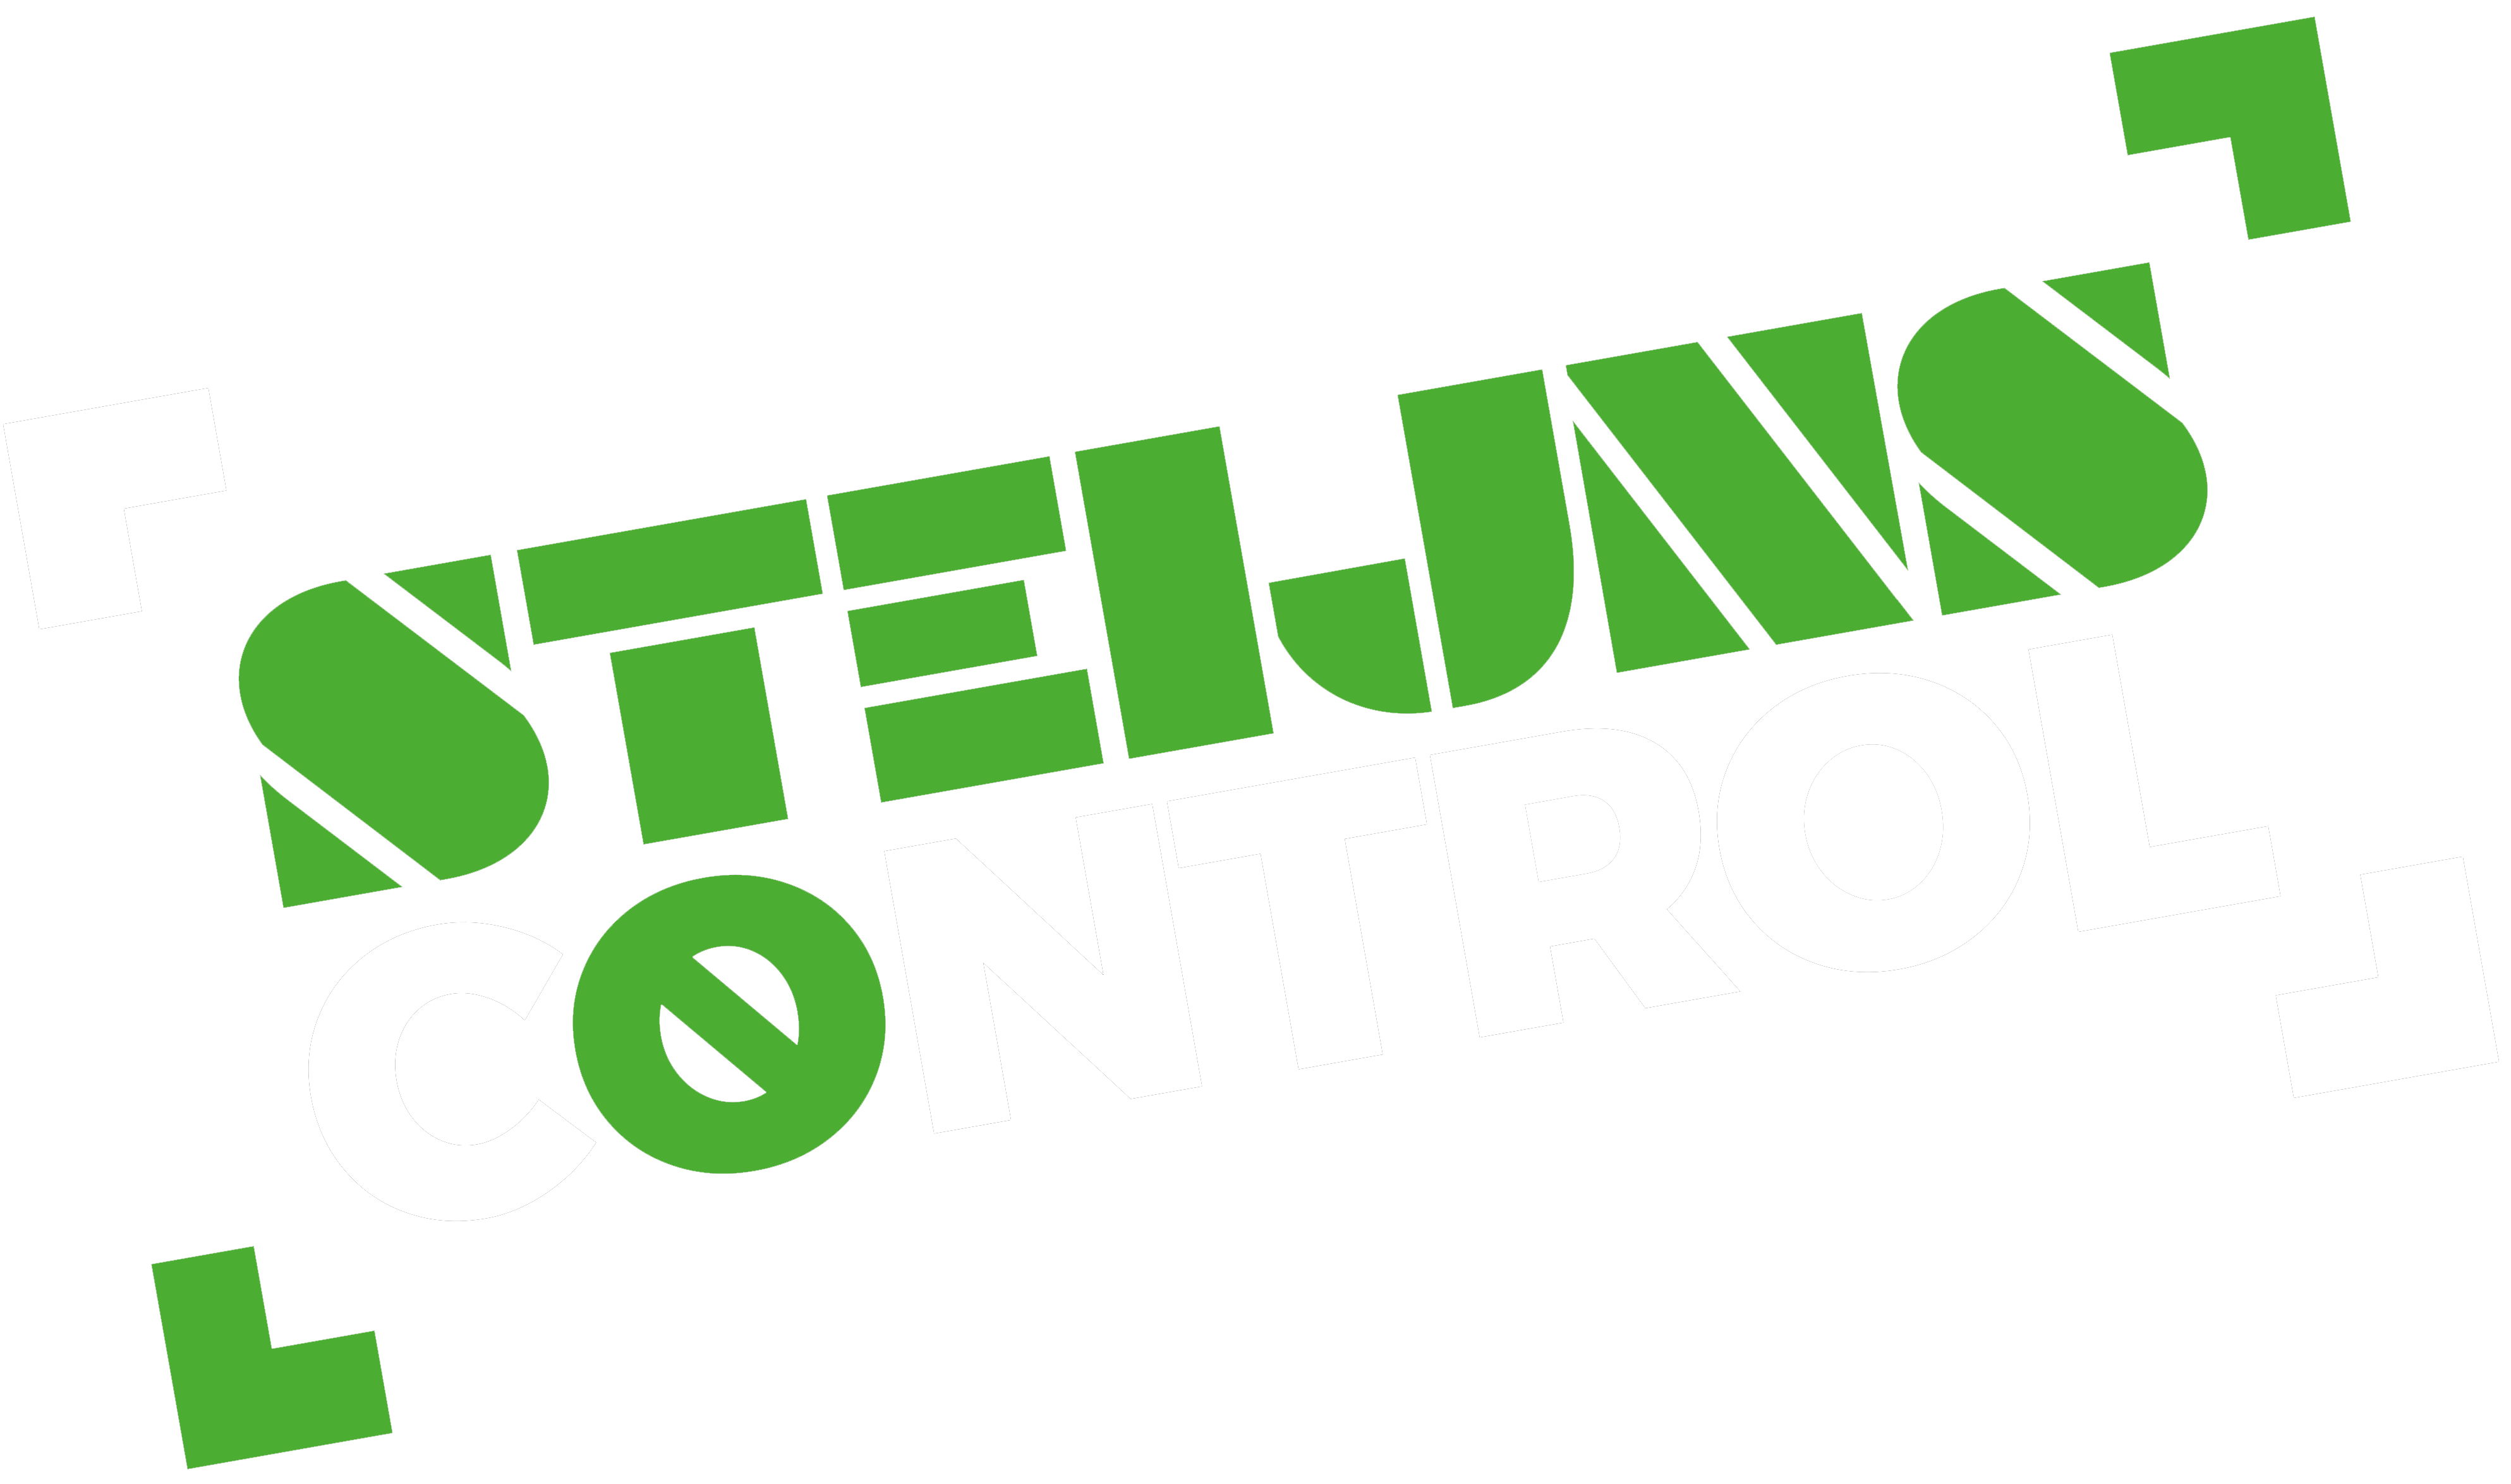 Steijns Control